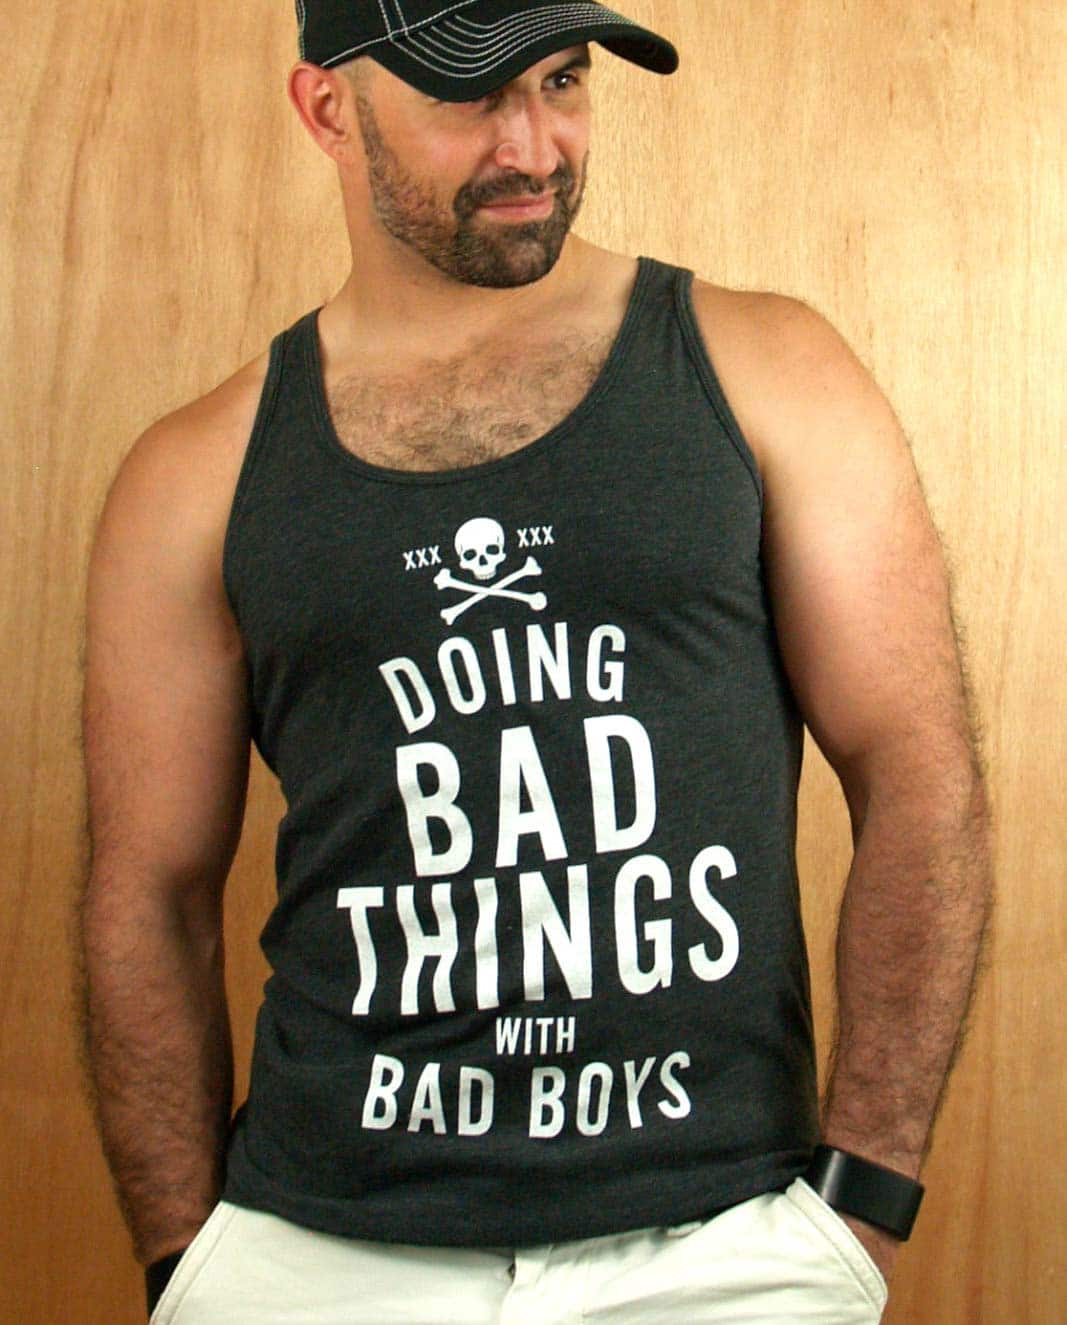 Men's tank tops - Ajaxx63 Doing Bad Things Men's Tank Top available at MensUnderwear.io - Image 1